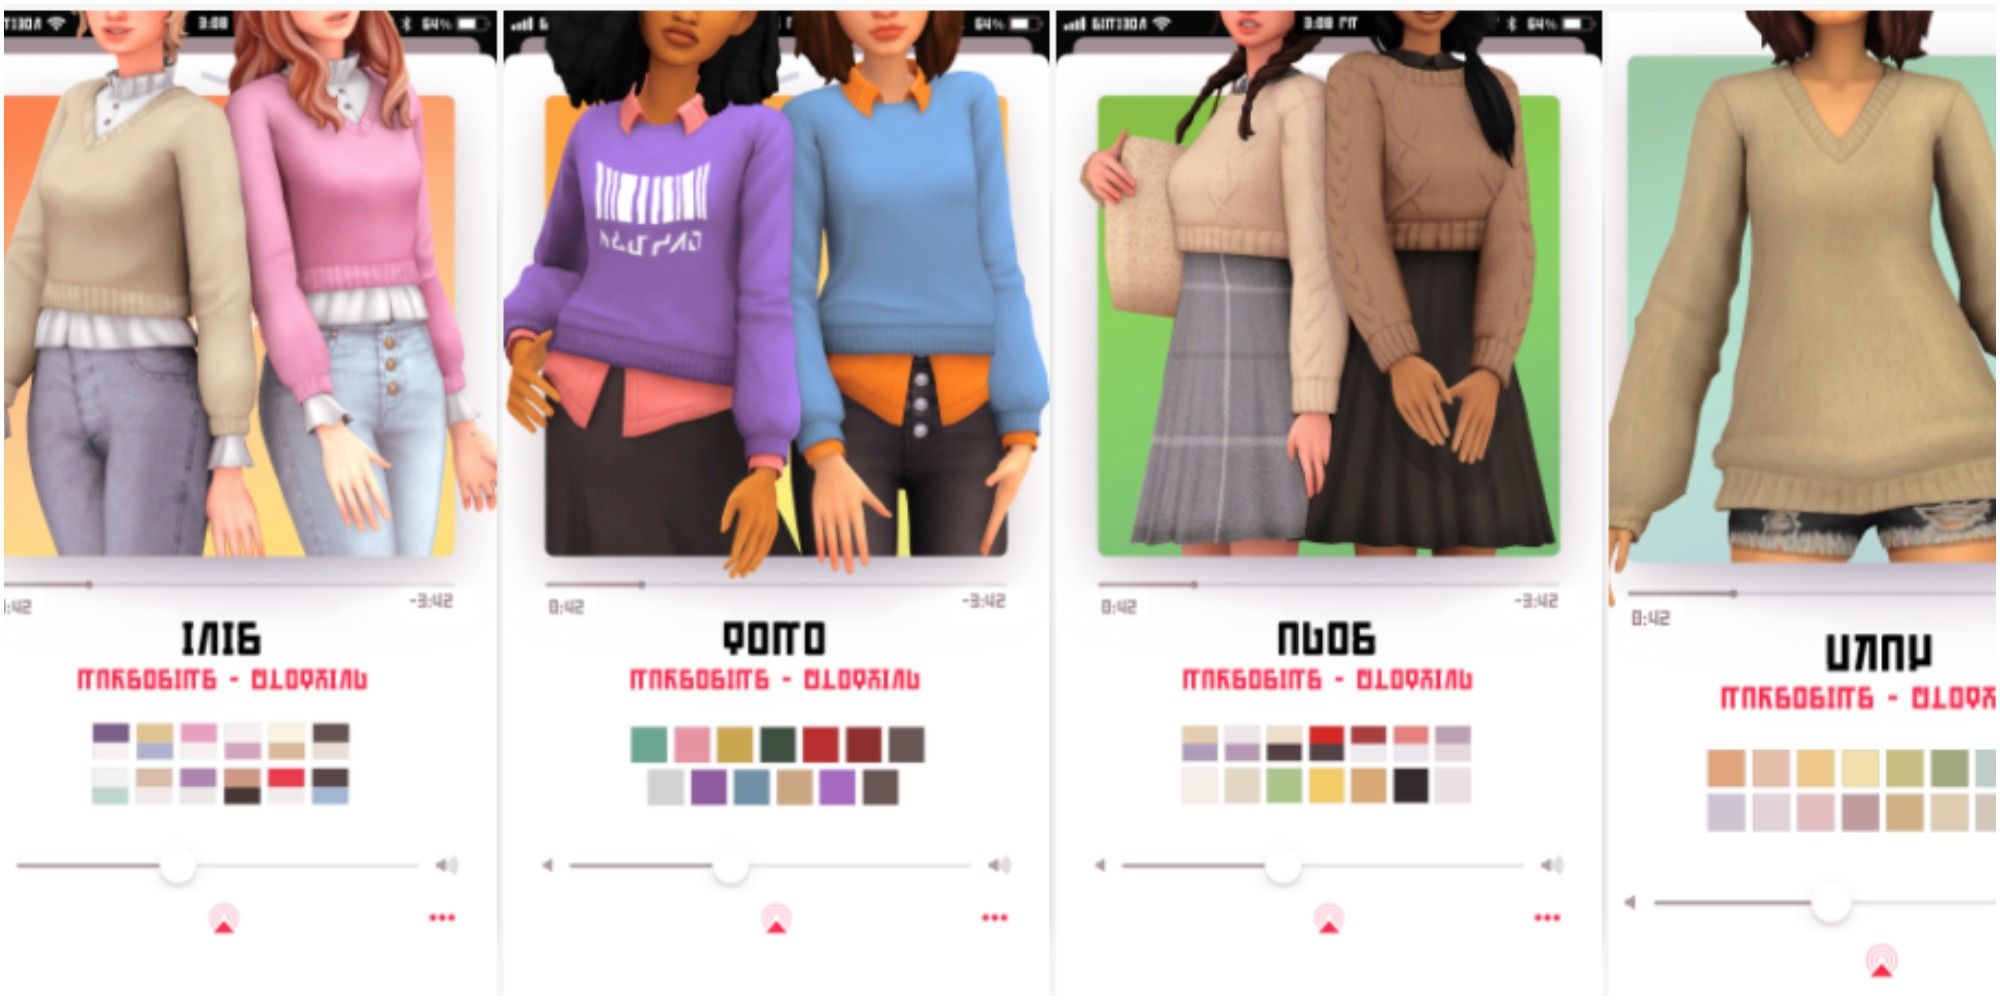 sims 4 custom content clothes